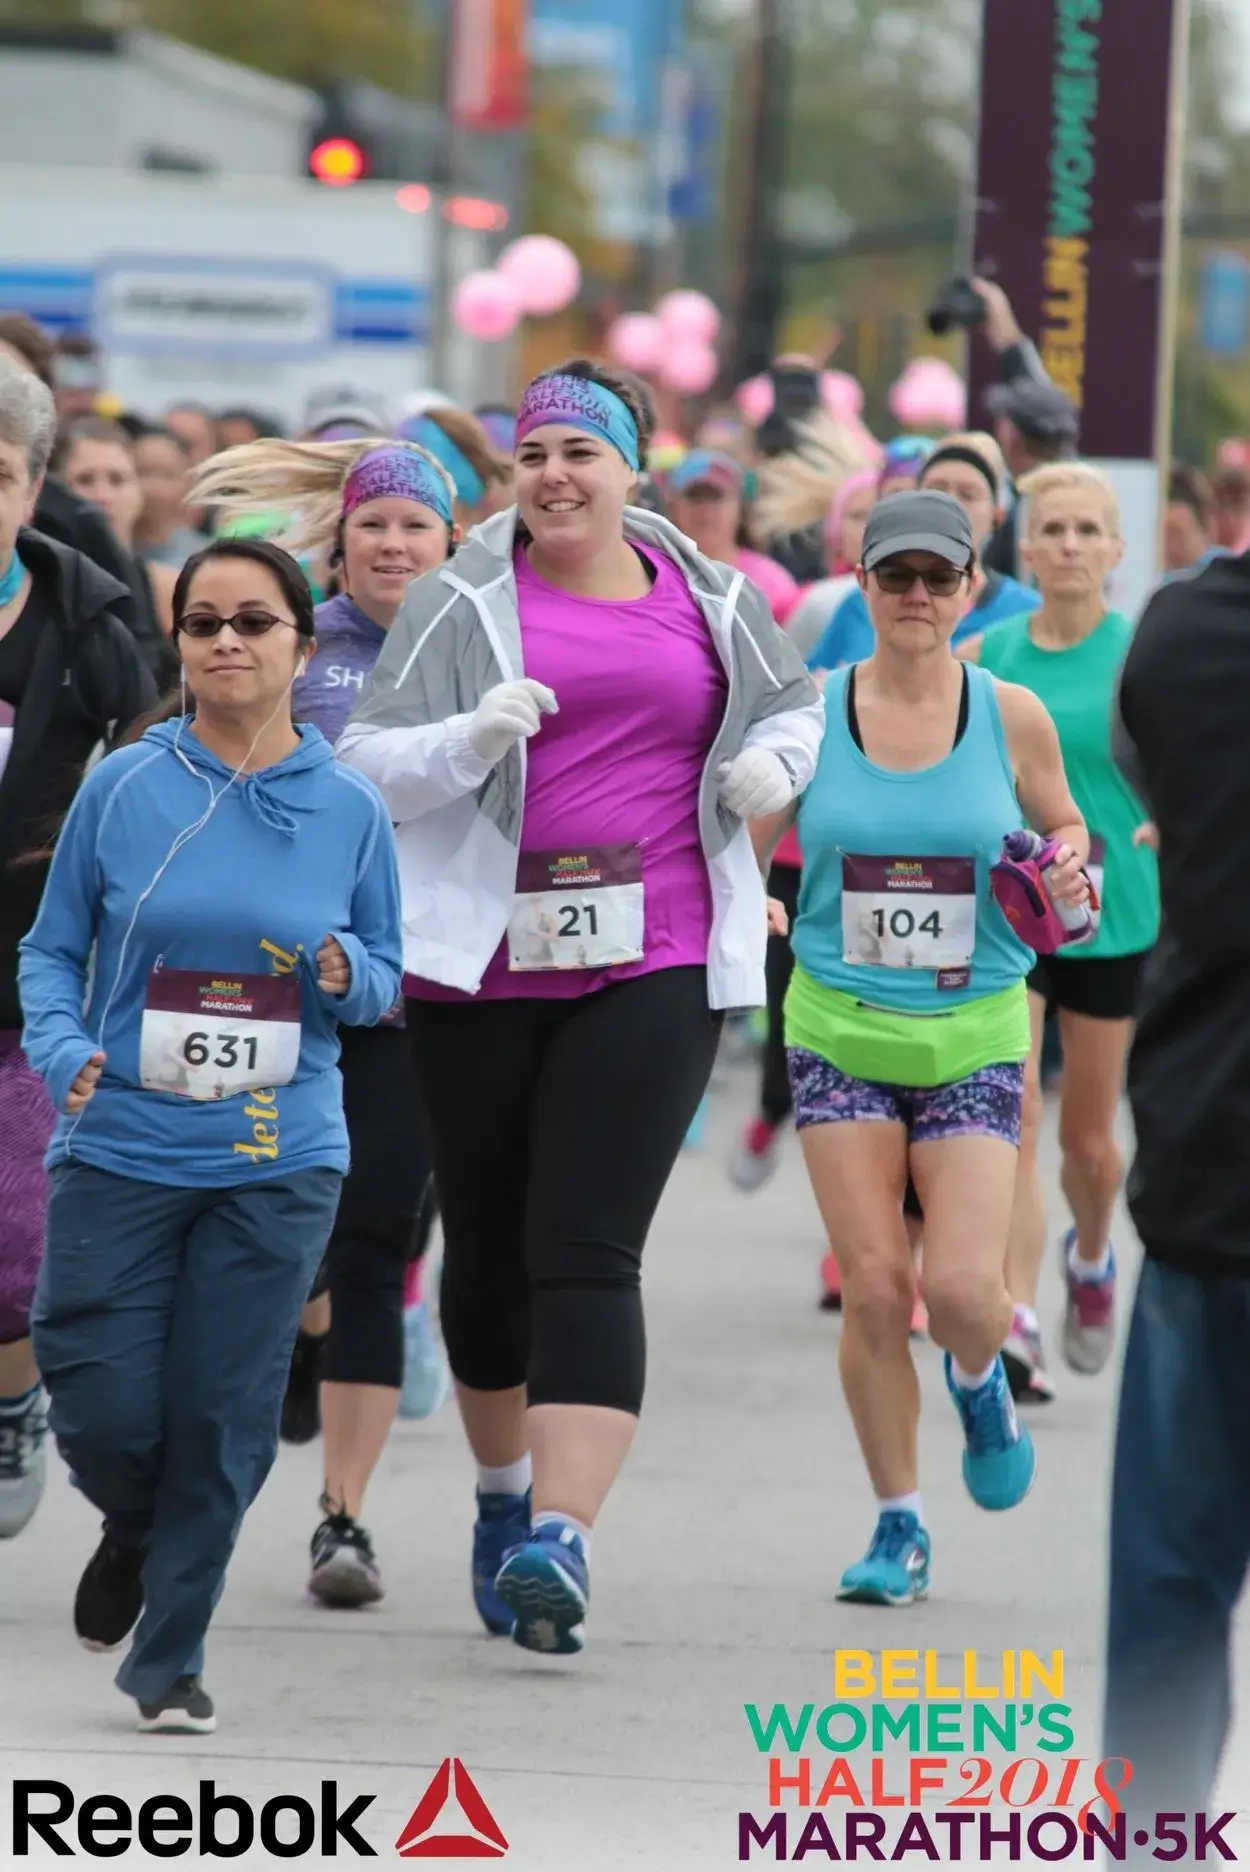 Diverse group of women running the Bellin Women's Half Marathon and 5k